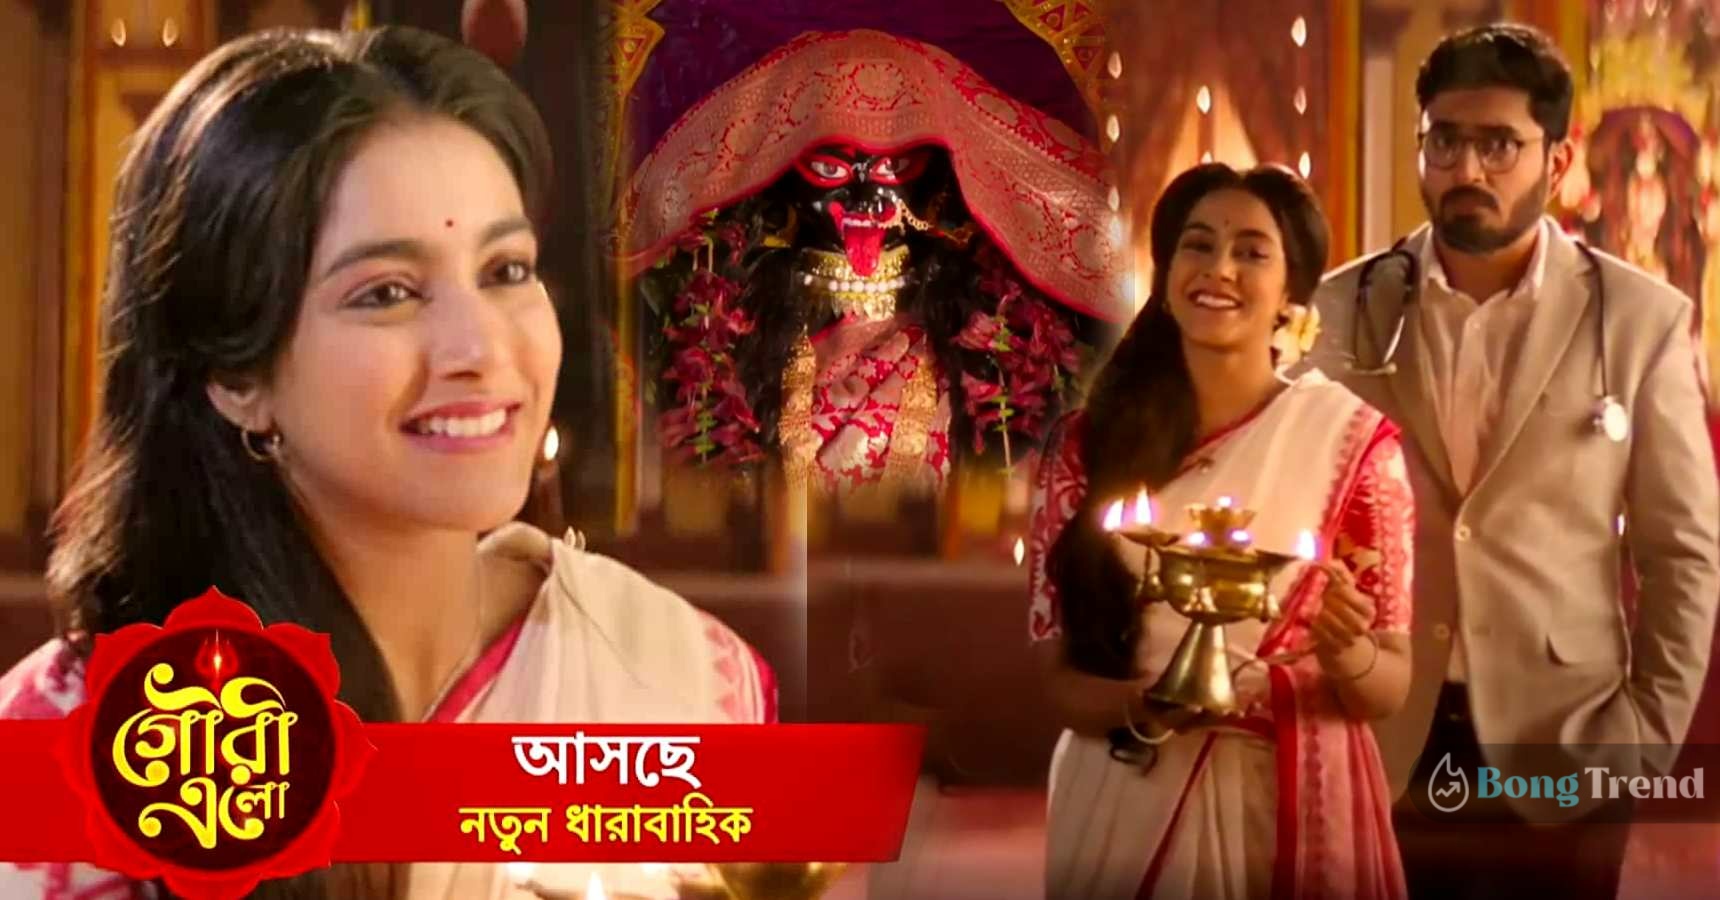 Zee Bangla New Serial Gouri Elo promo video with probable time slot